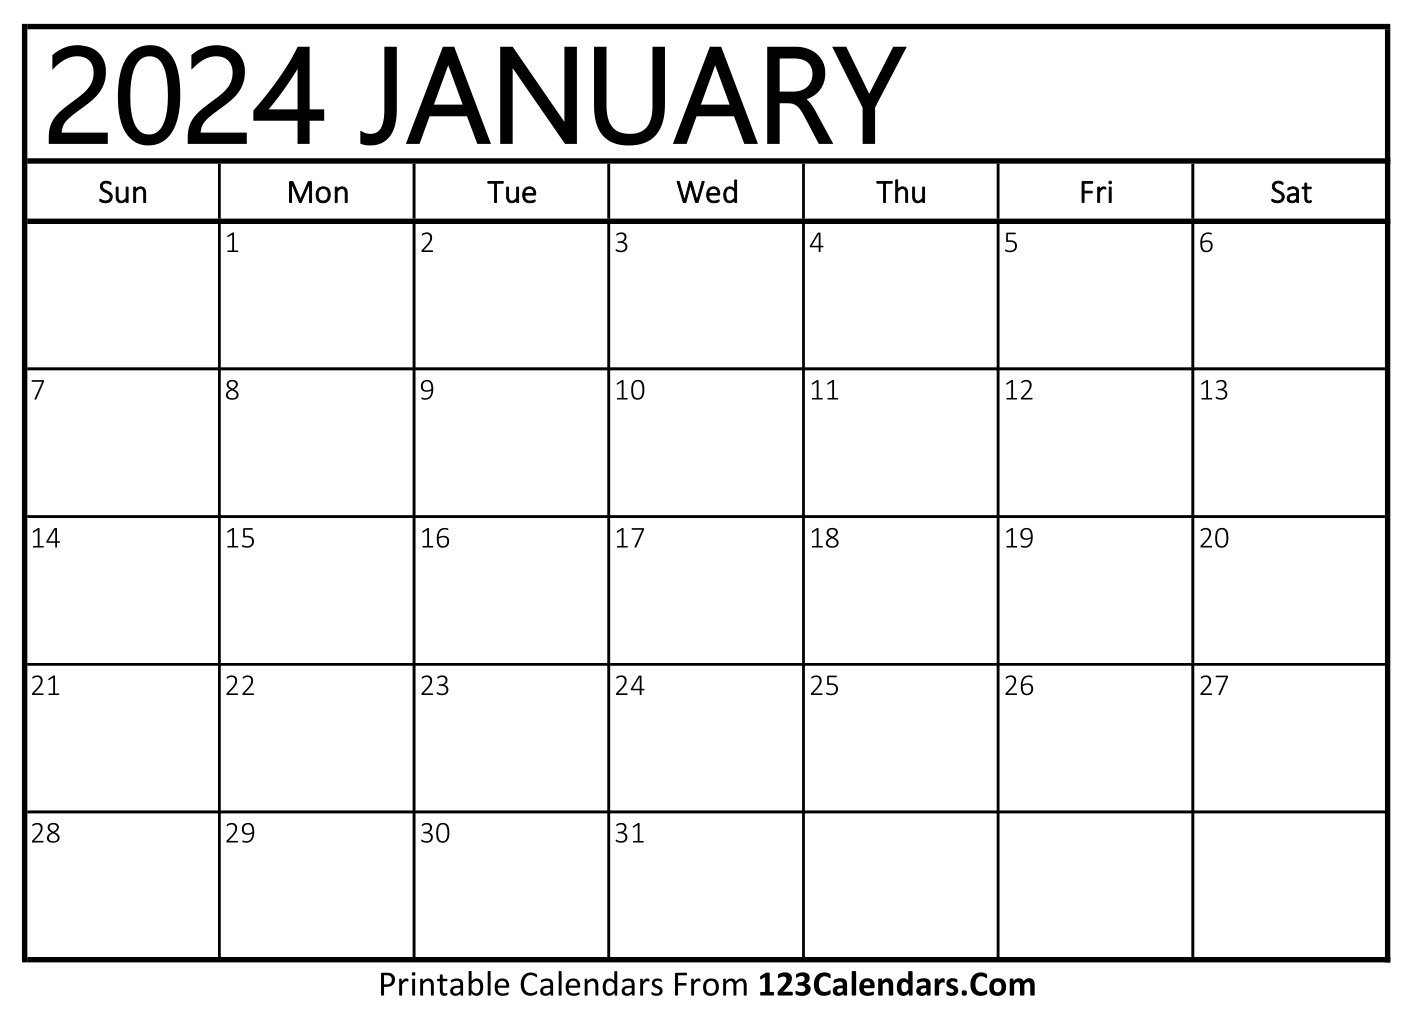 2024 January Calendar Printable Free Pdf Wikimedia Commons Printable